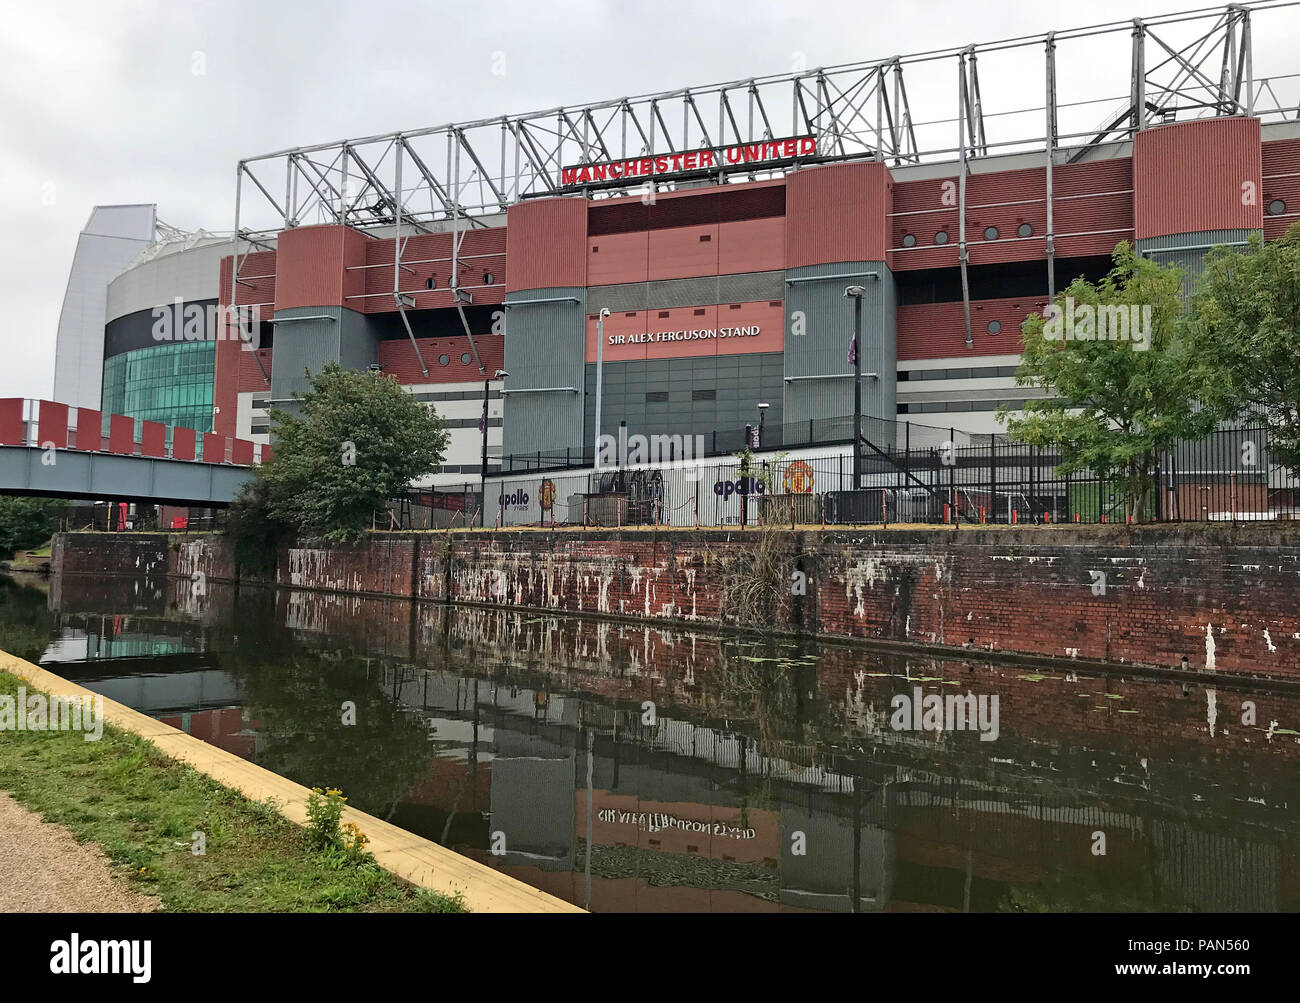 Club de football de Manchester United, Alex Ferguson,MUFC,stand de canal, Stretford, Manchester, North West England, UK Banque D'Images